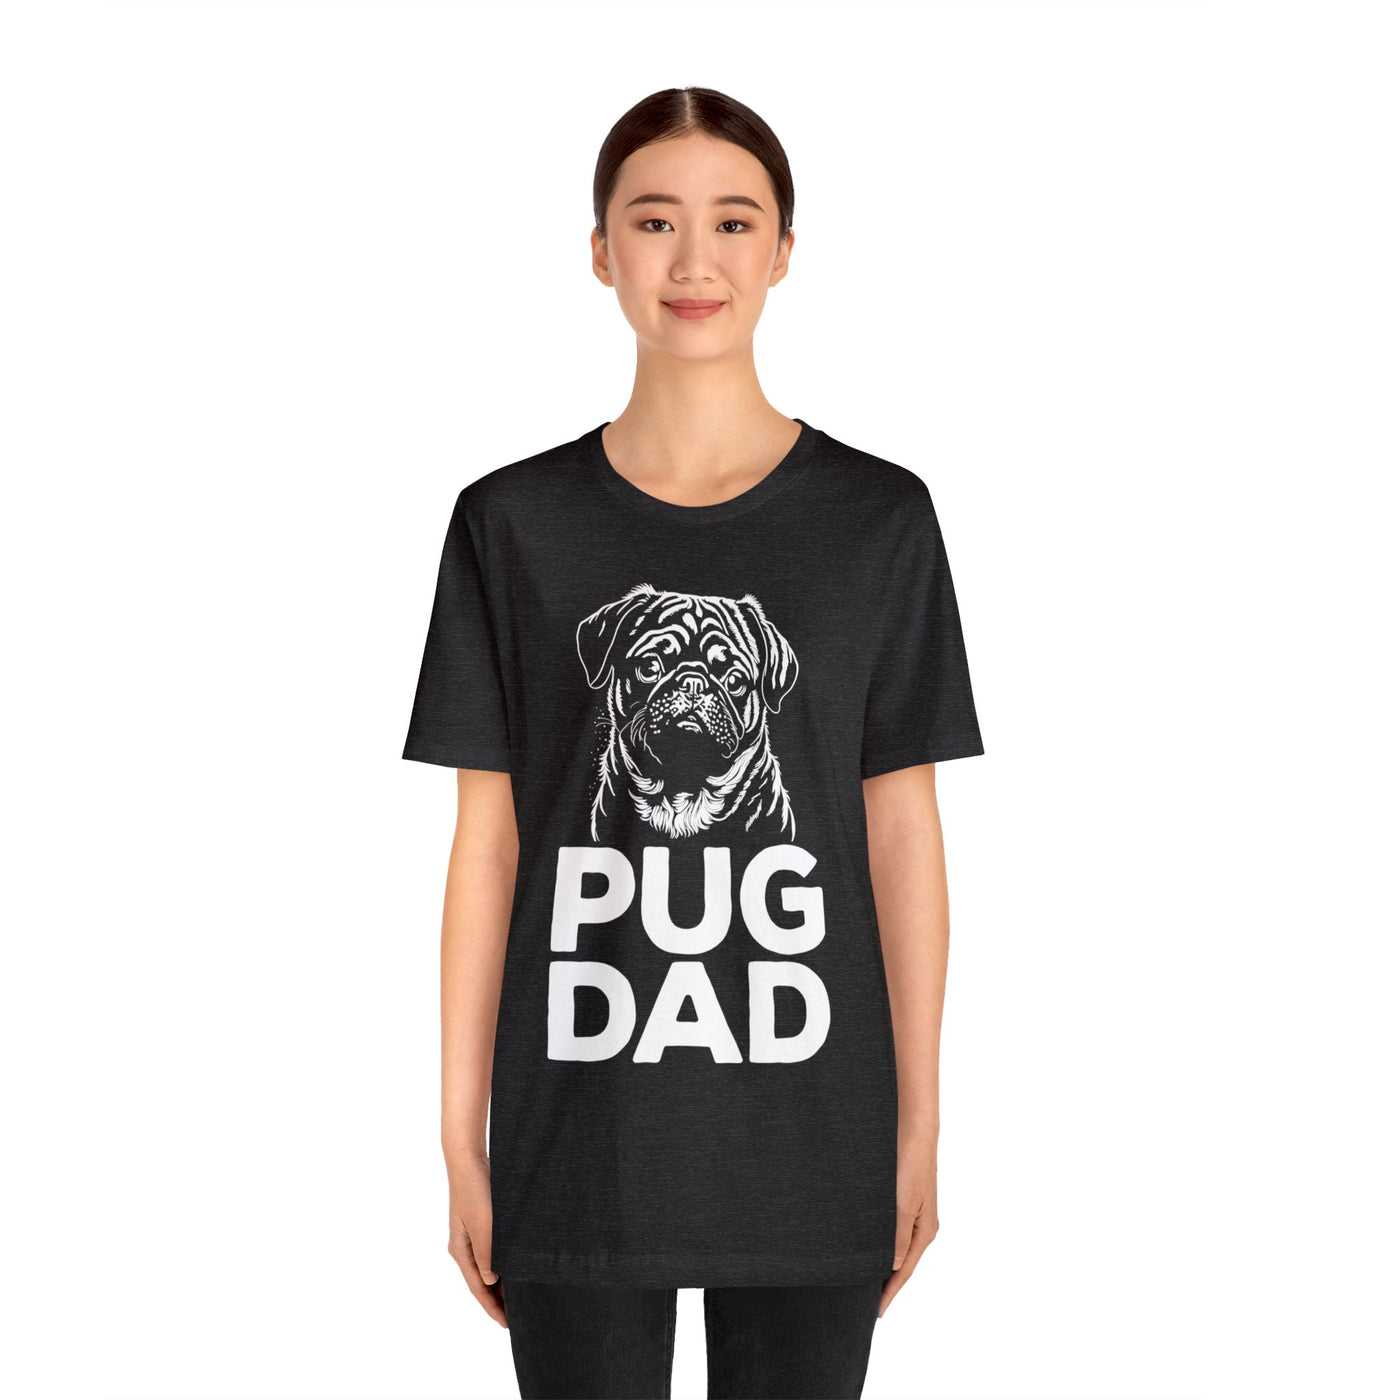 Pug Dad T-Shirt